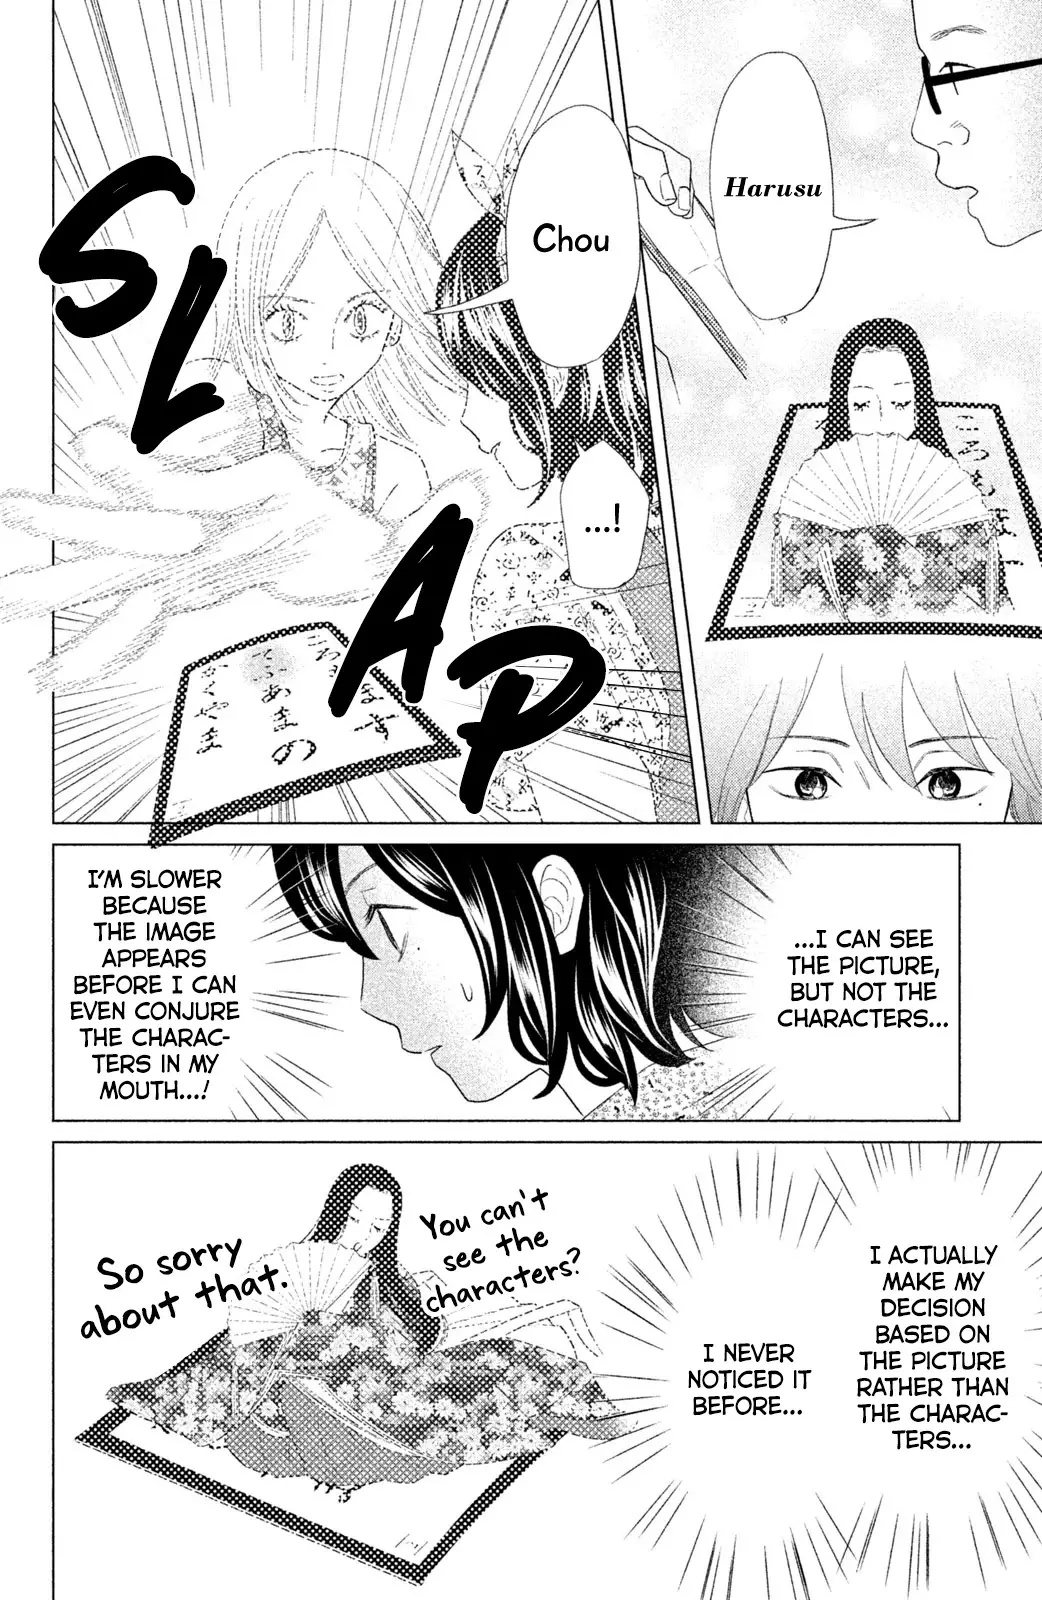 Chihayafuru: Middle School Arc - 12 page 13